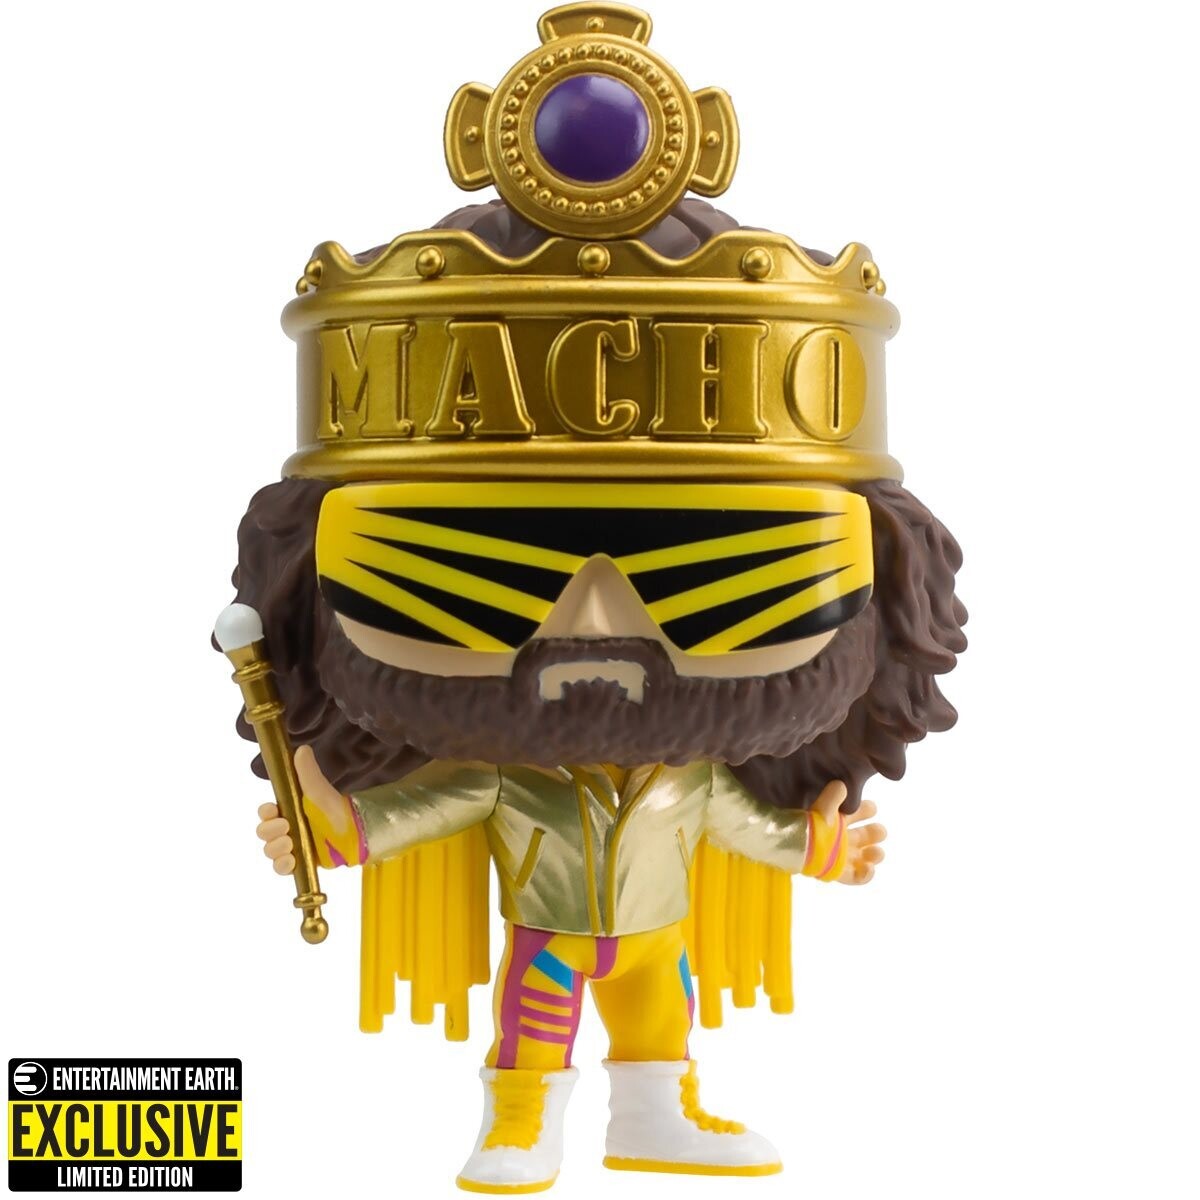 PRE-ORDER Funko WWE King Macho Man Metallic Pop! Vinyl Figure - Entertainment Earth Exclusive